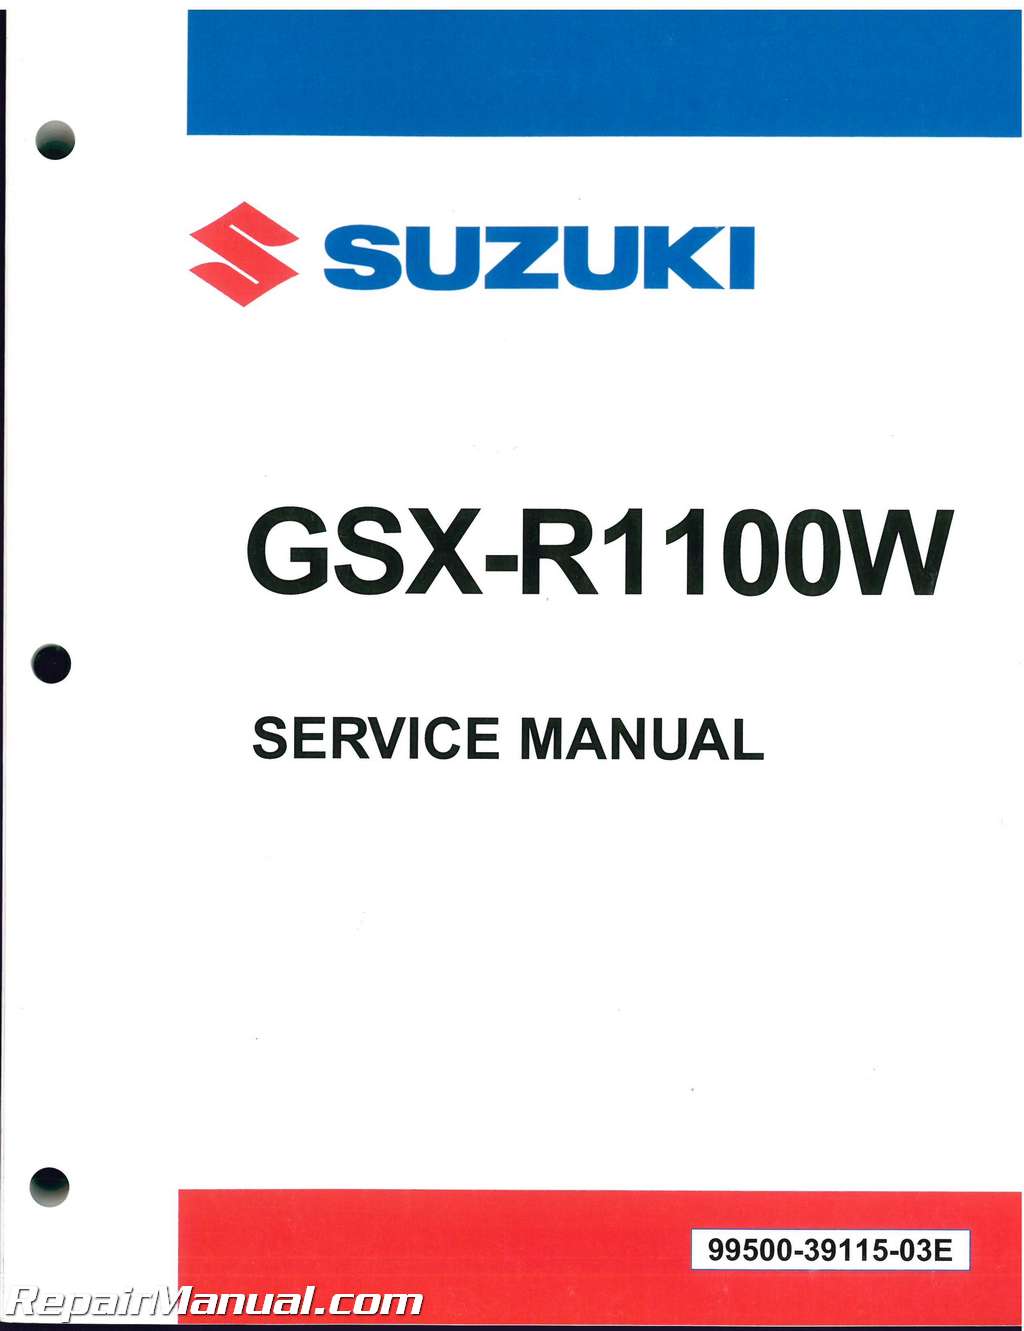 Genuine Suzuki GSXR 1100 W GSX-R1100W GSX-R1100 Service Manual 99500-39110-01E 